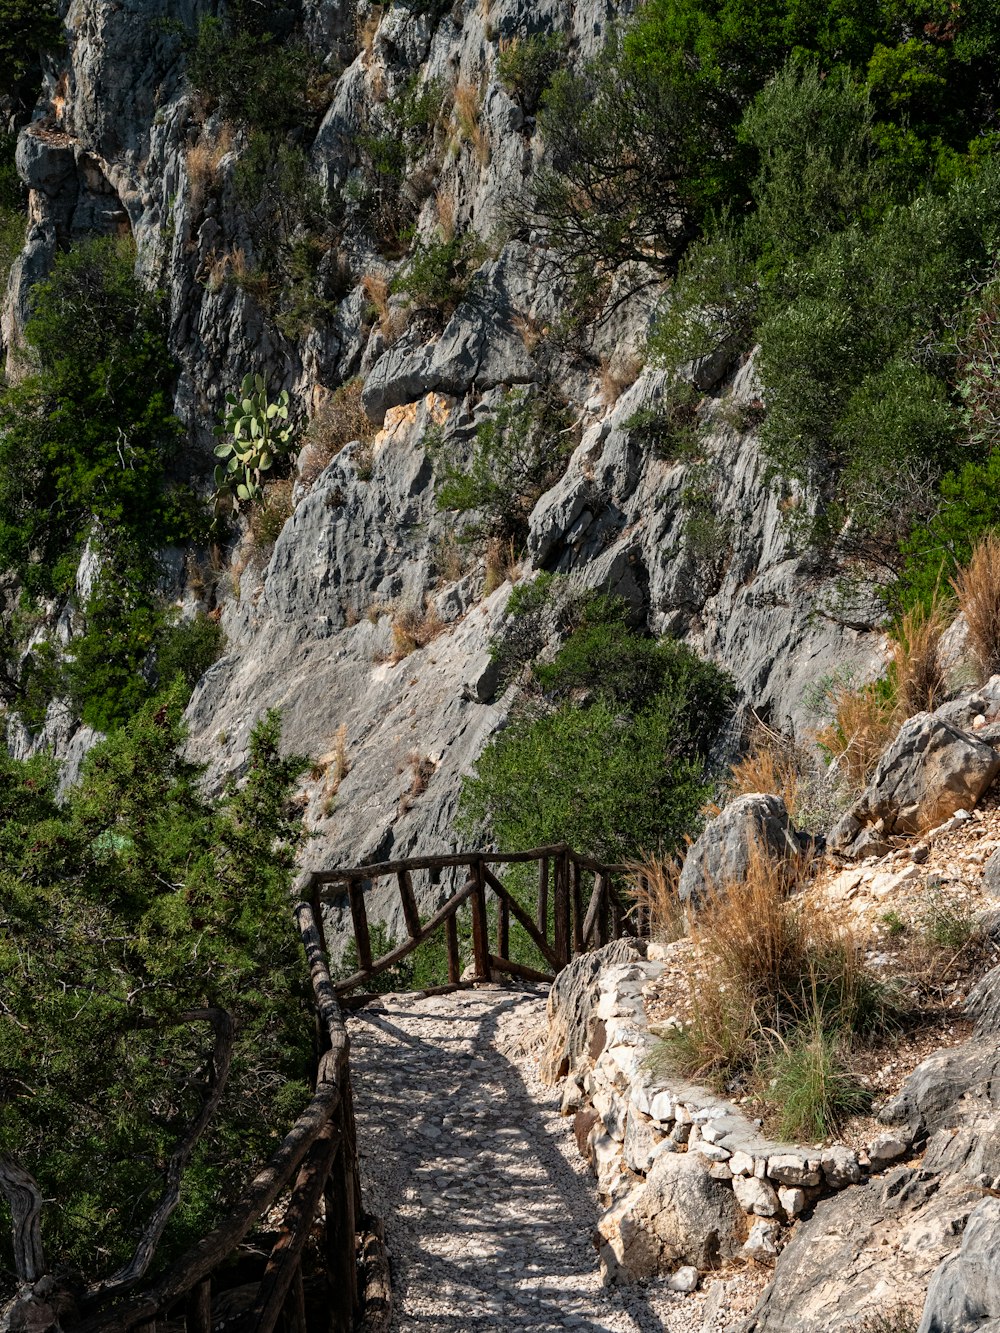 a wooden bridge going over a rocky cliff